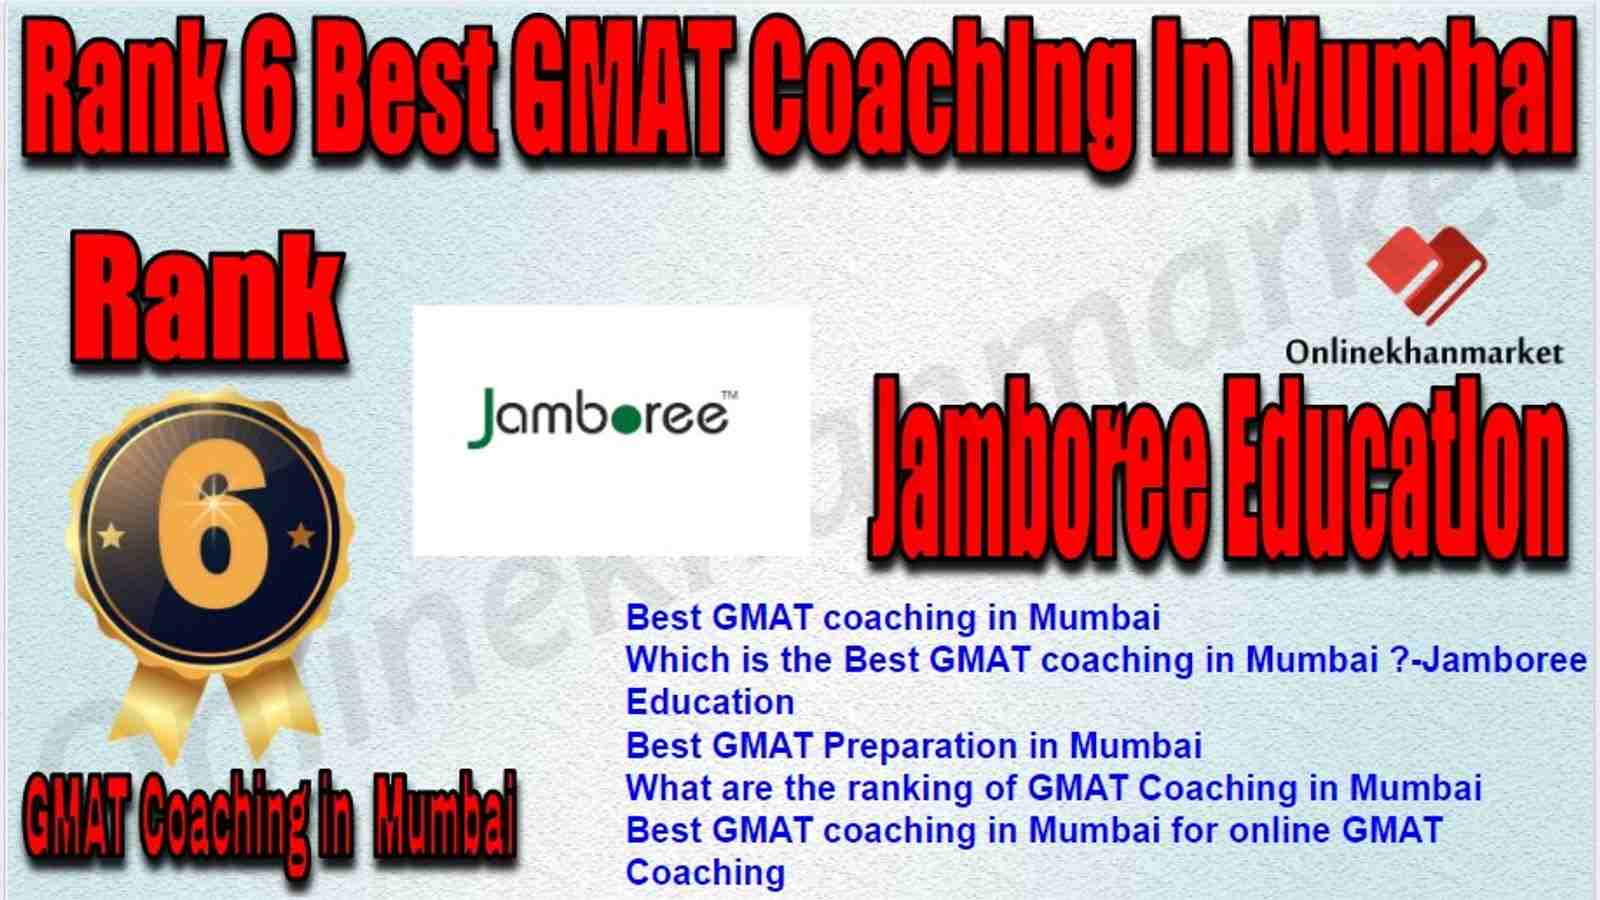 Rank 6 Best GMAT Coaching in Mumbai